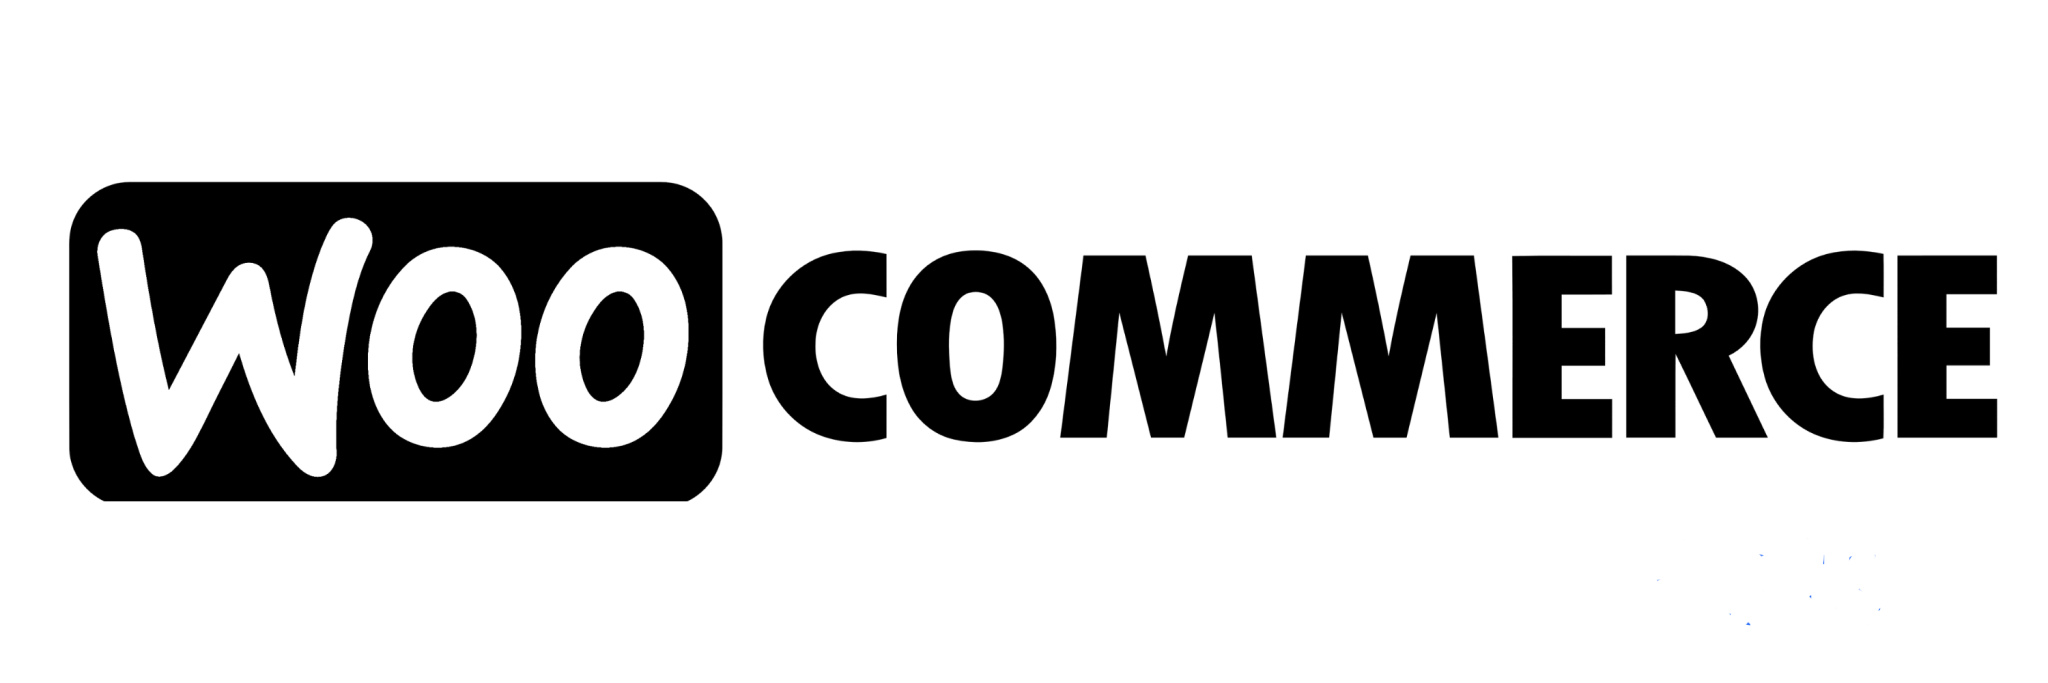 Woocommerce-Logo